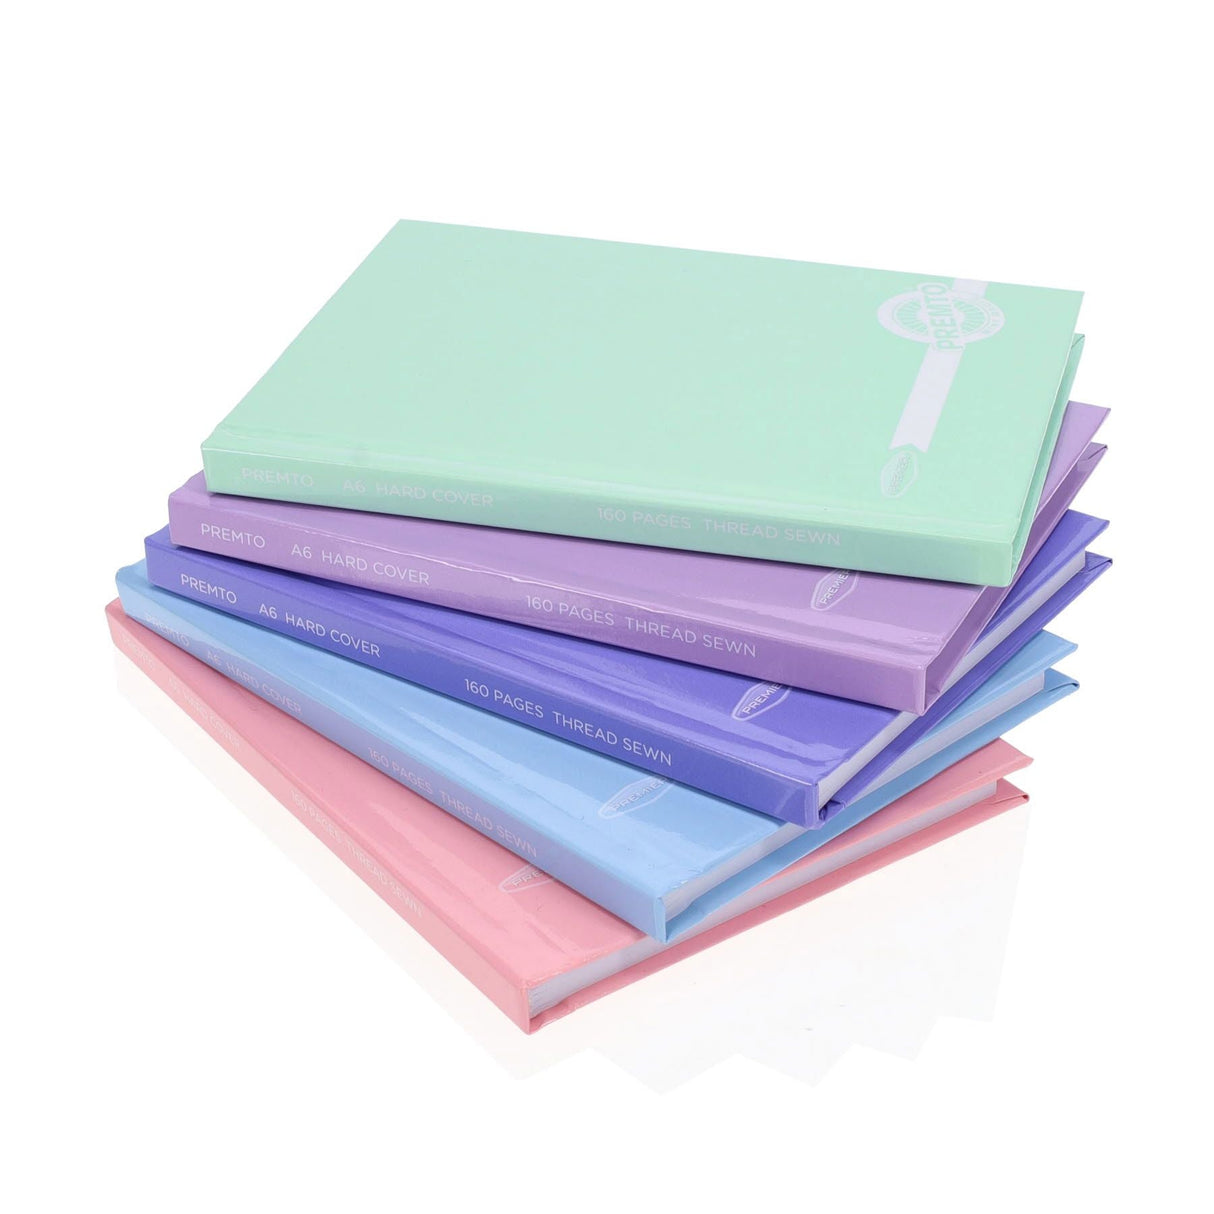 Premto Pastel A6 Hardcover Notebook - 160 Pages - Pastel - Cornflower Blue | Stationery Shop UK